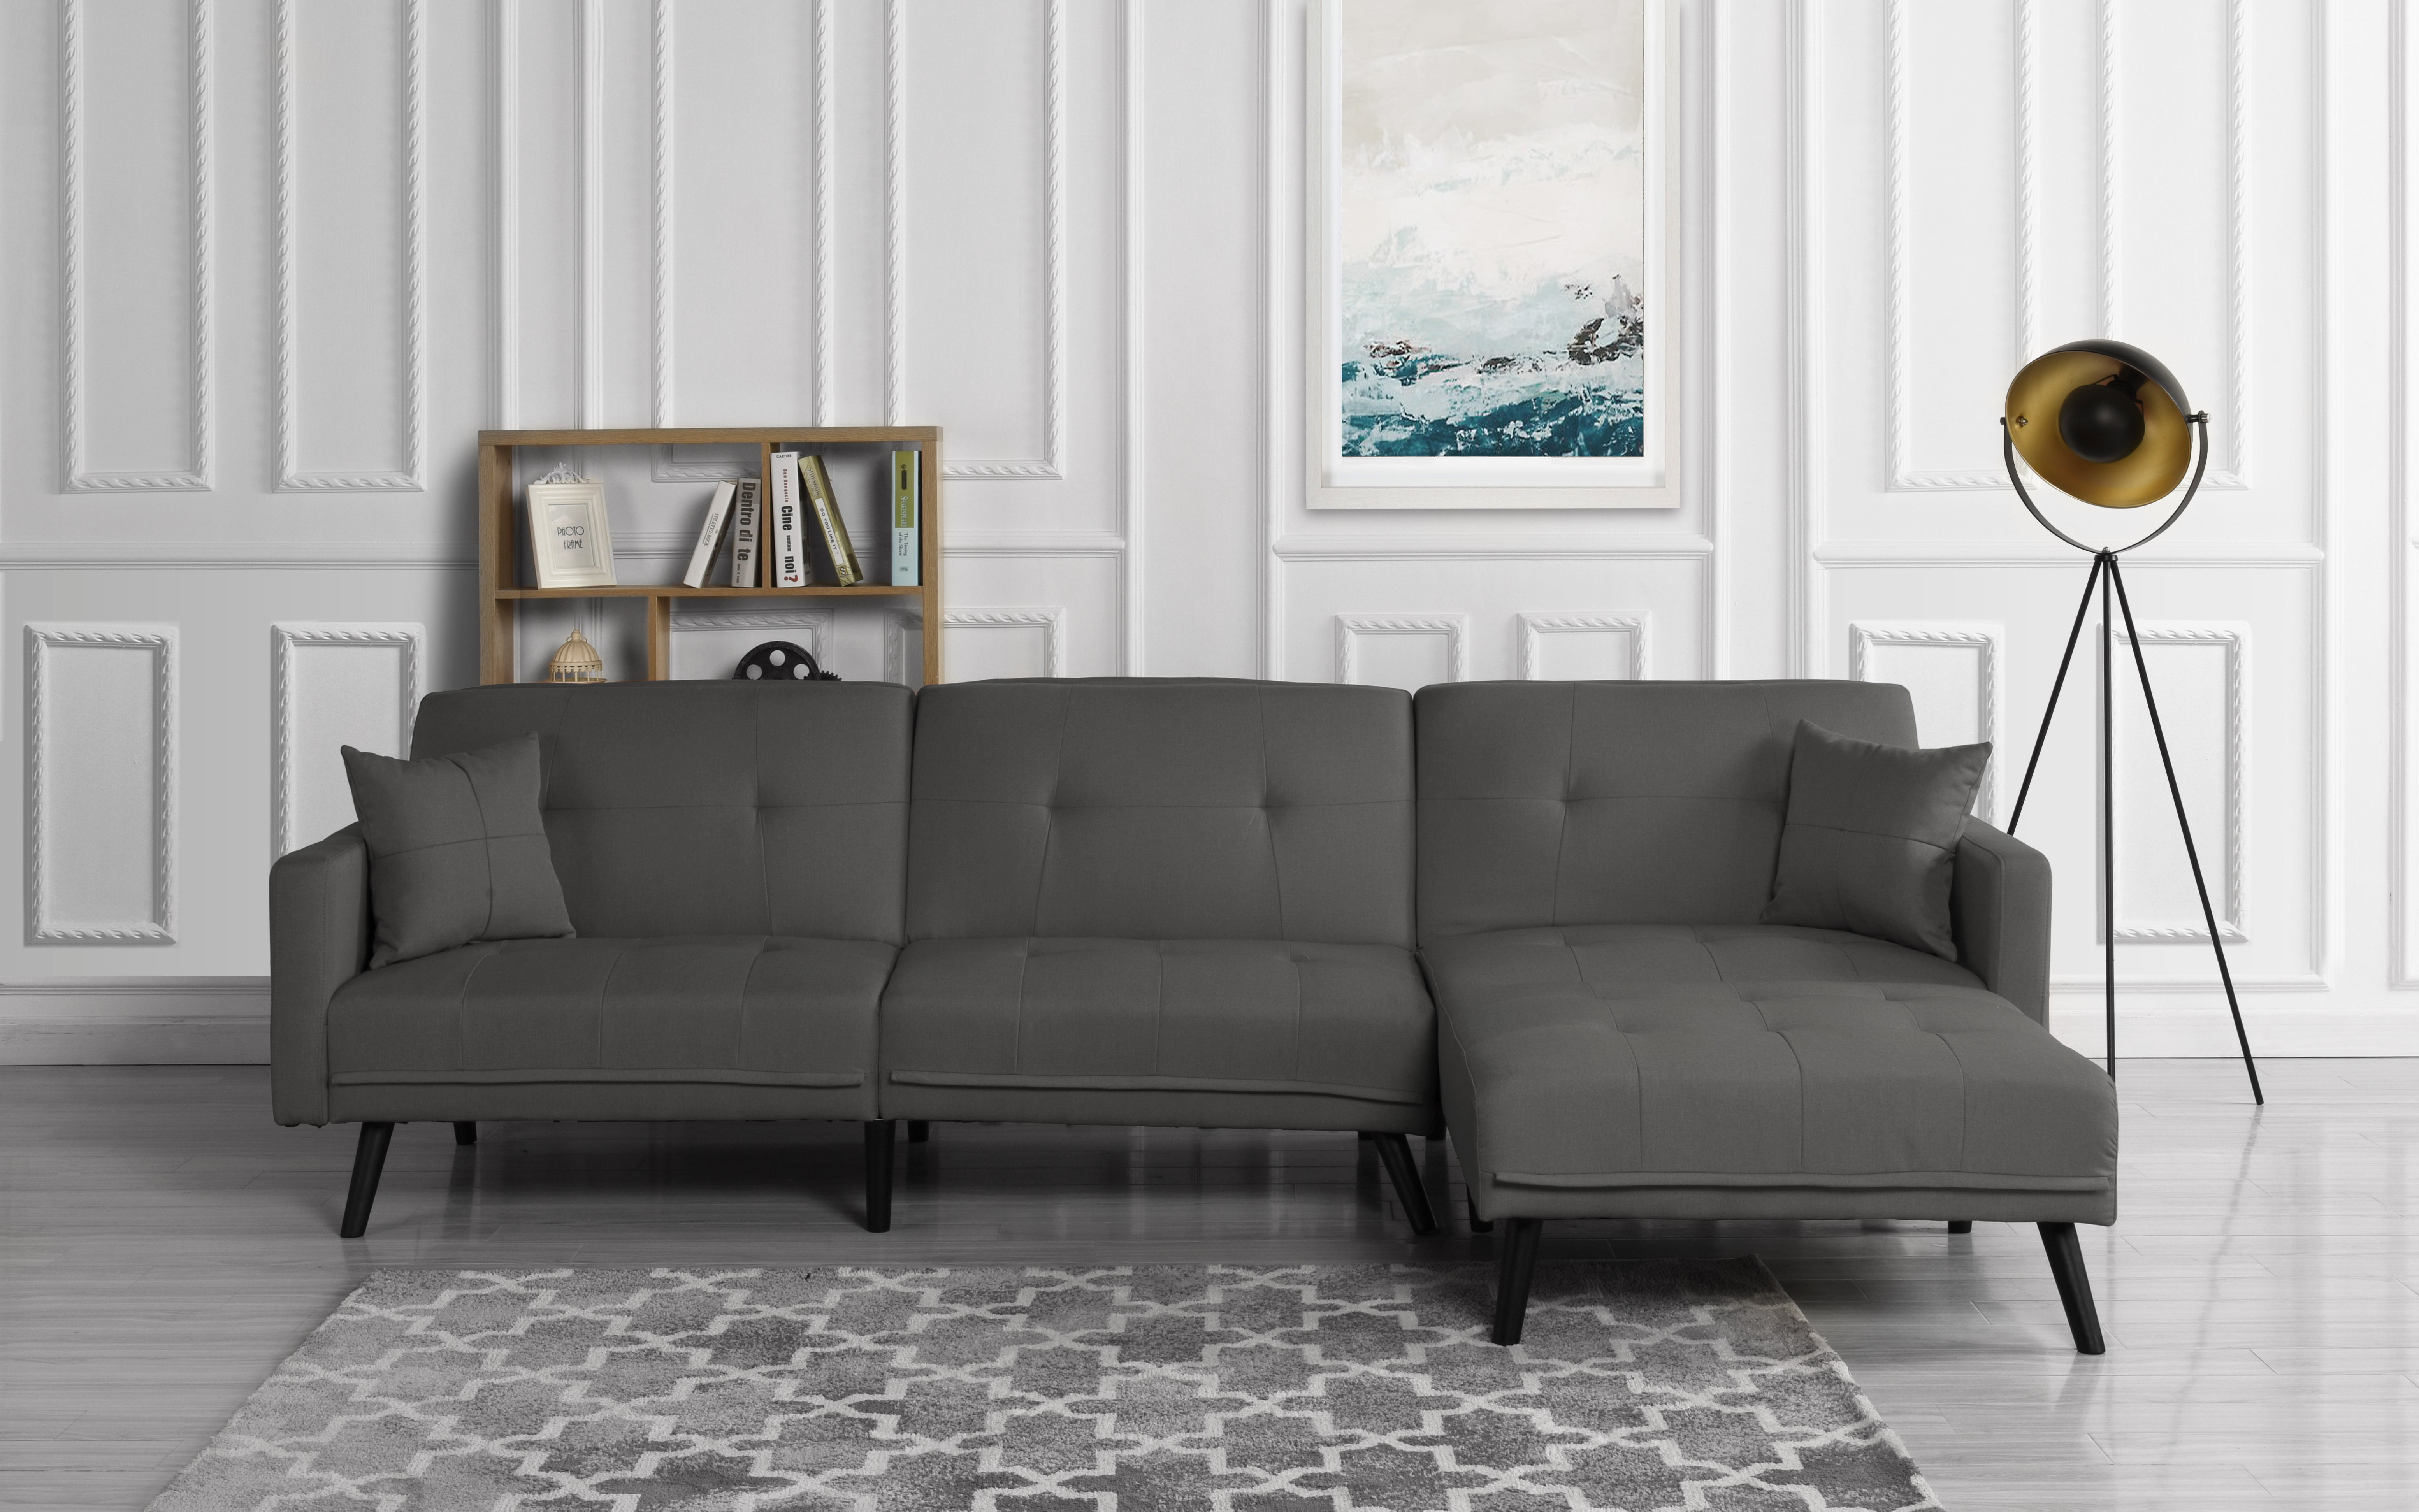 modern living room ideas with futon